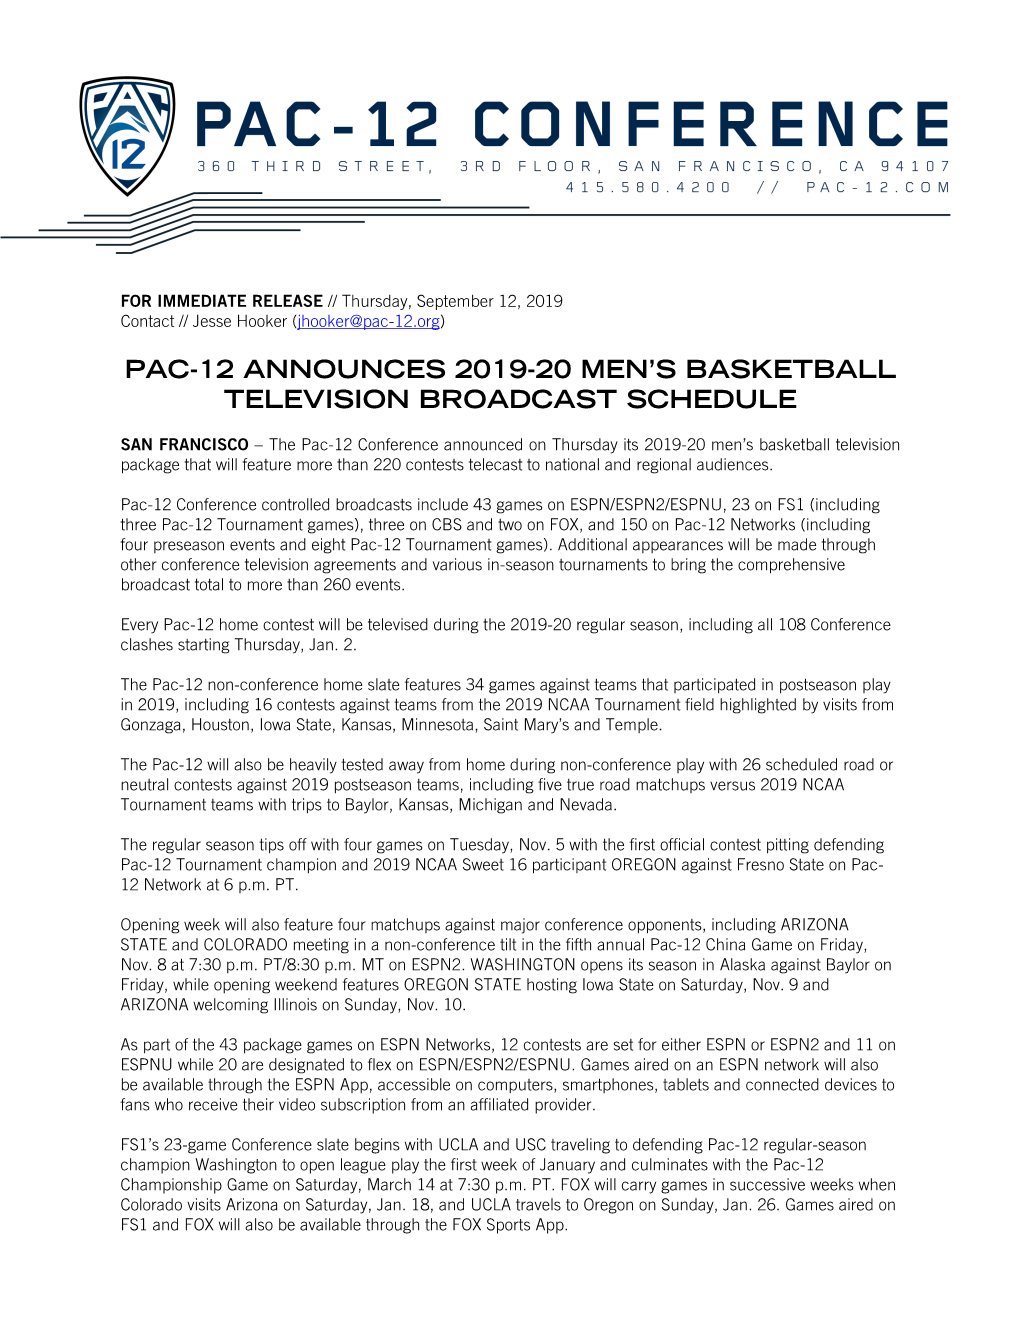 Pac-12 Announces 2019-20 Men's Basketball Television